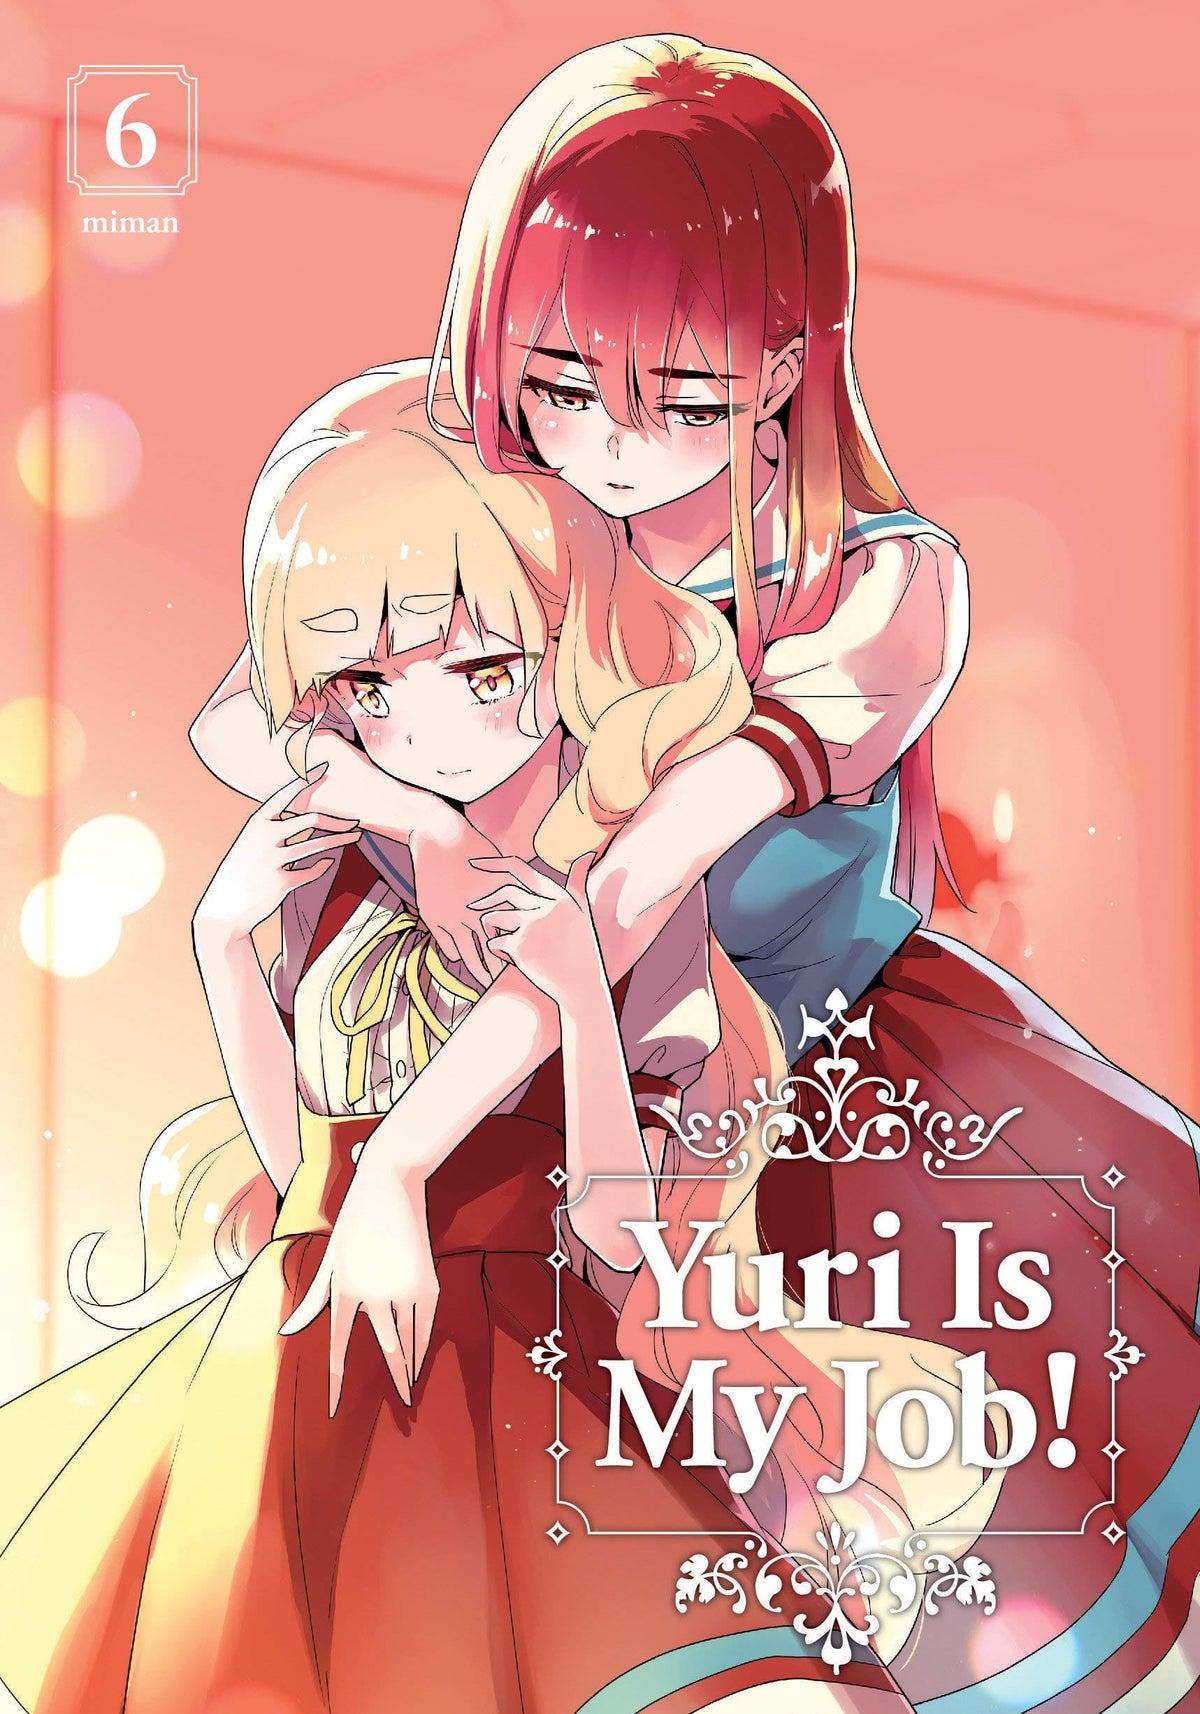 Yuri Is My Job! Vol. 6 - Third Eye